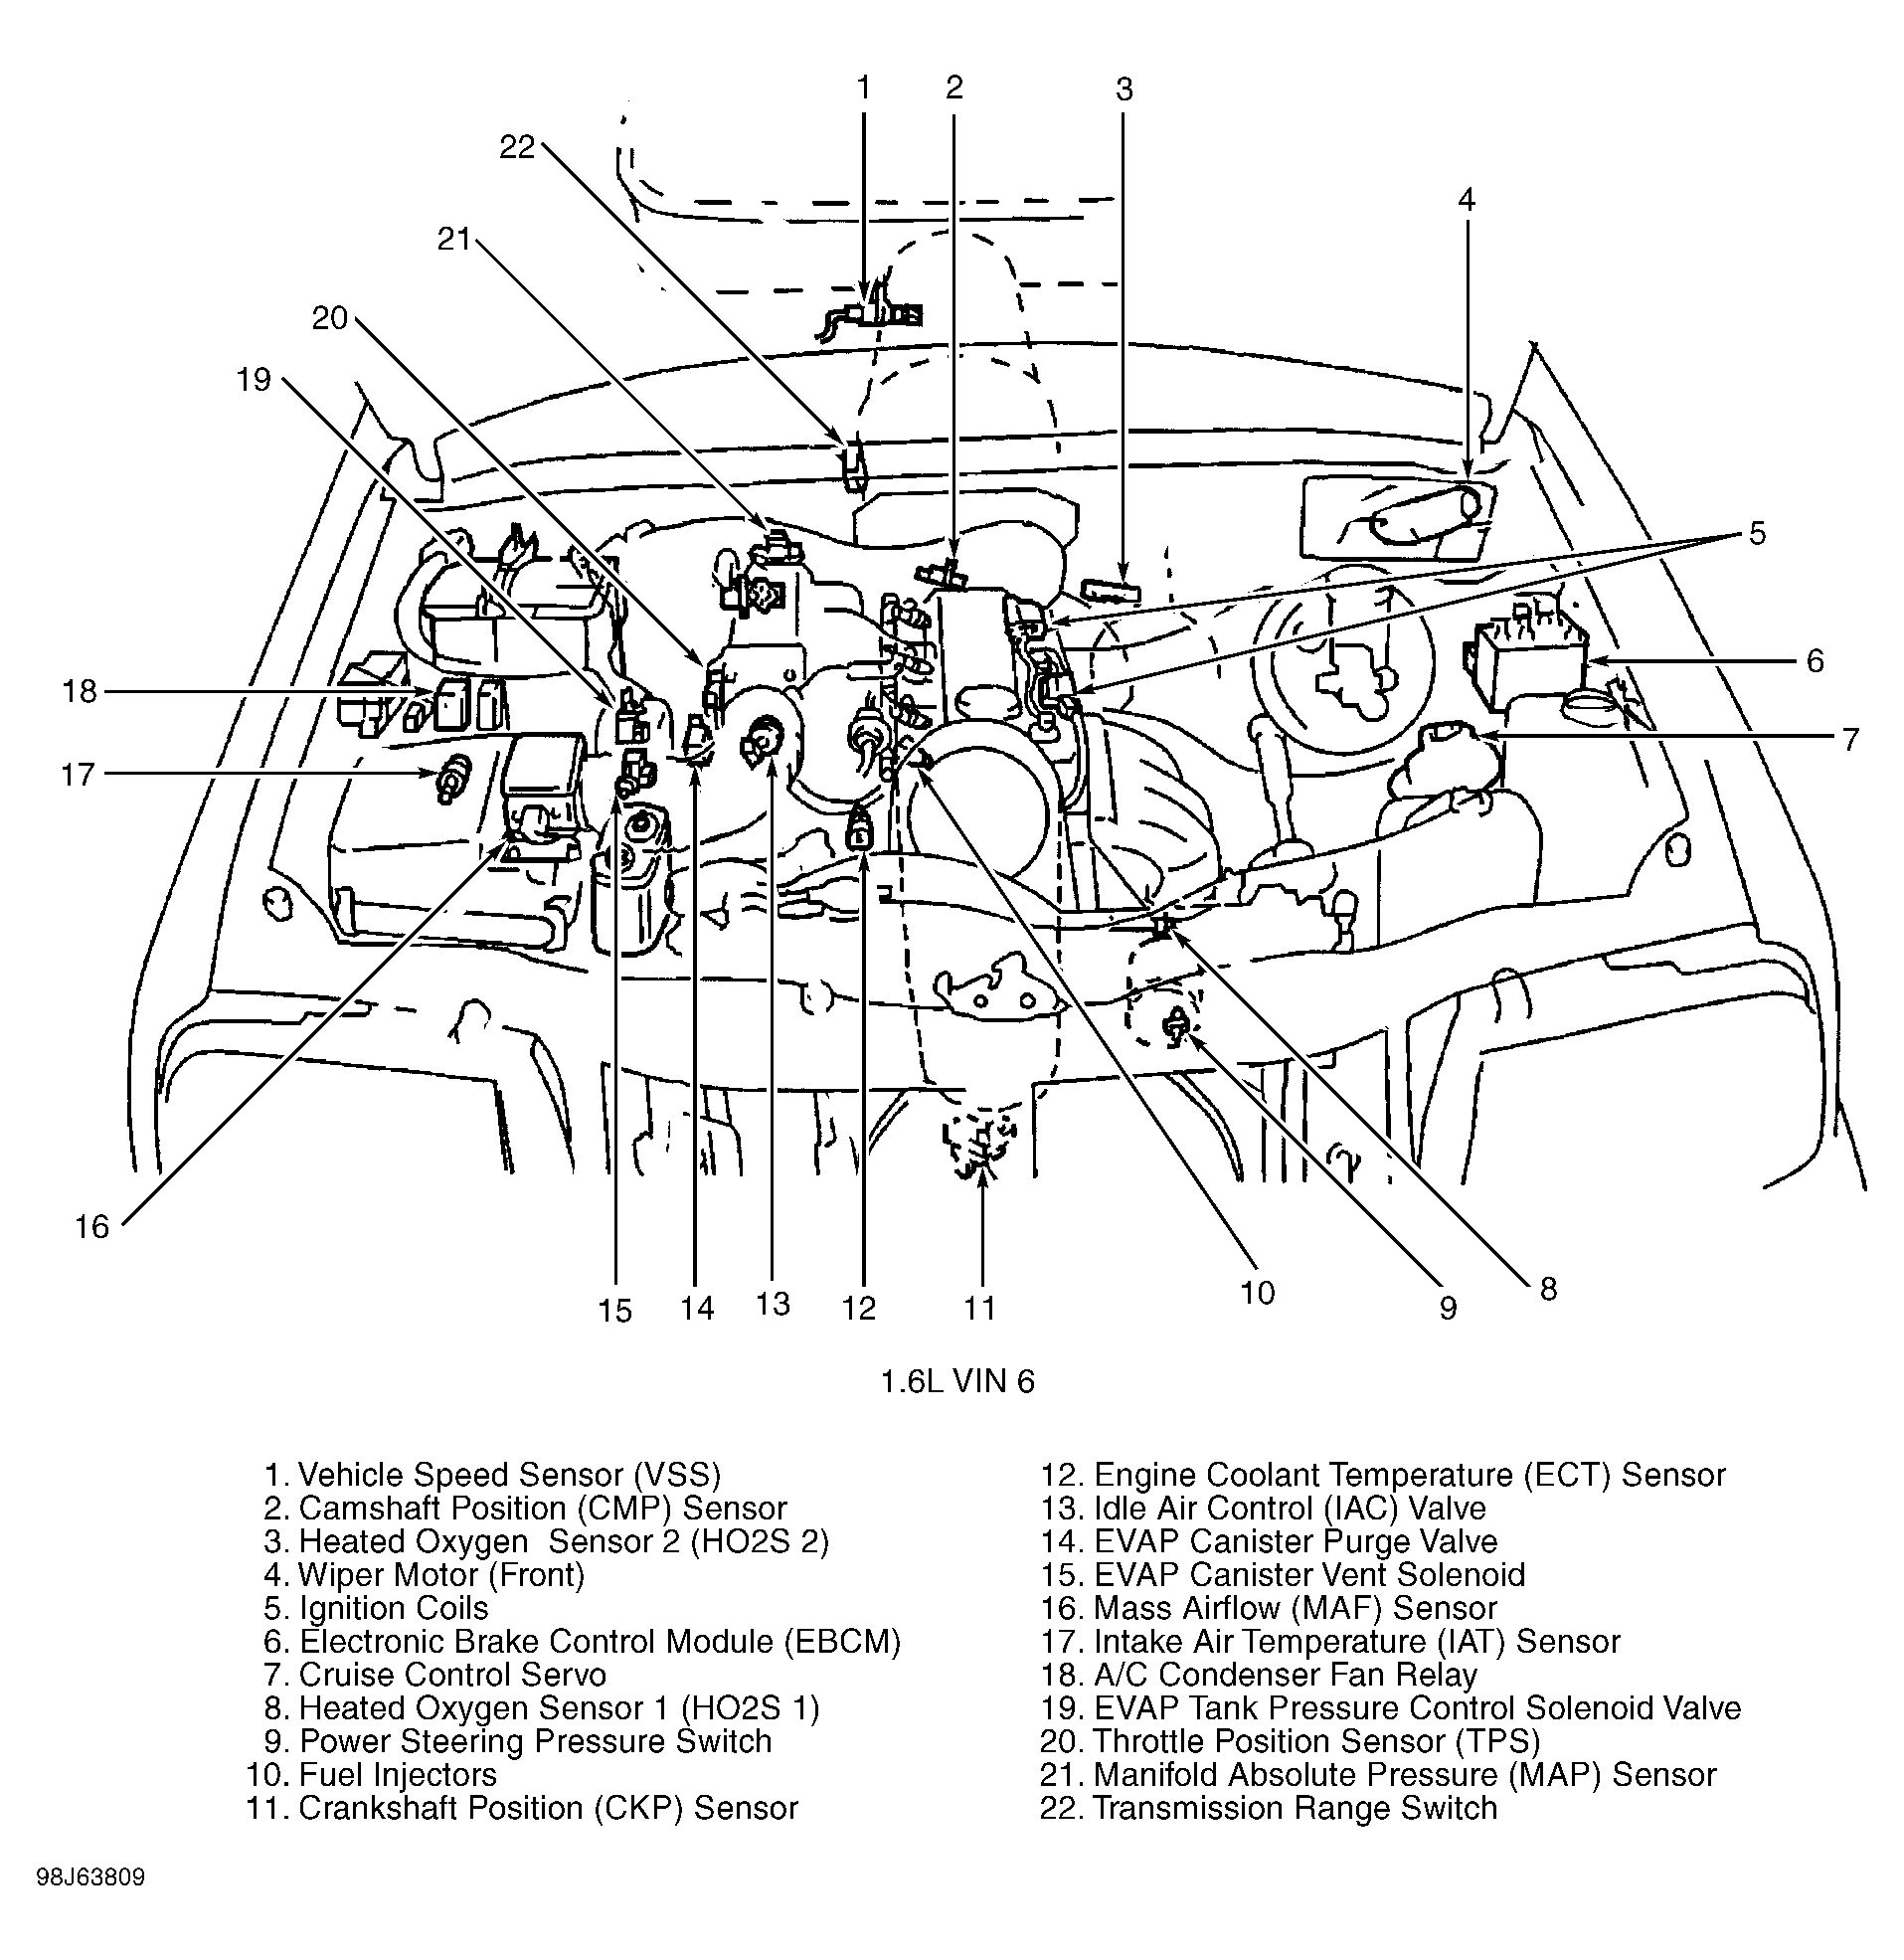 Chevrolet Tracker 2000 - Component Locations -  Engine Compartment (1.6L VIN 6)